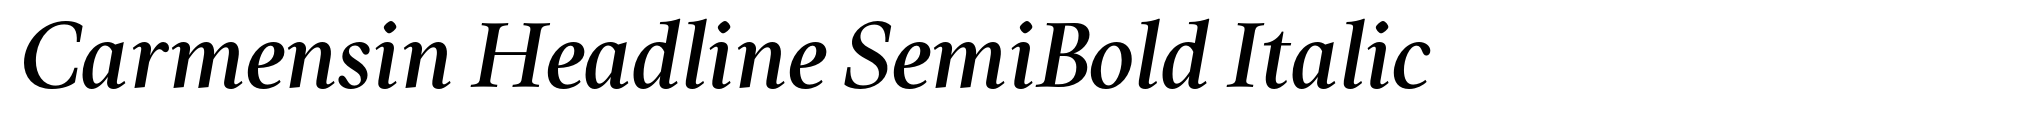 Carmensin Headline SemiBold Italic image